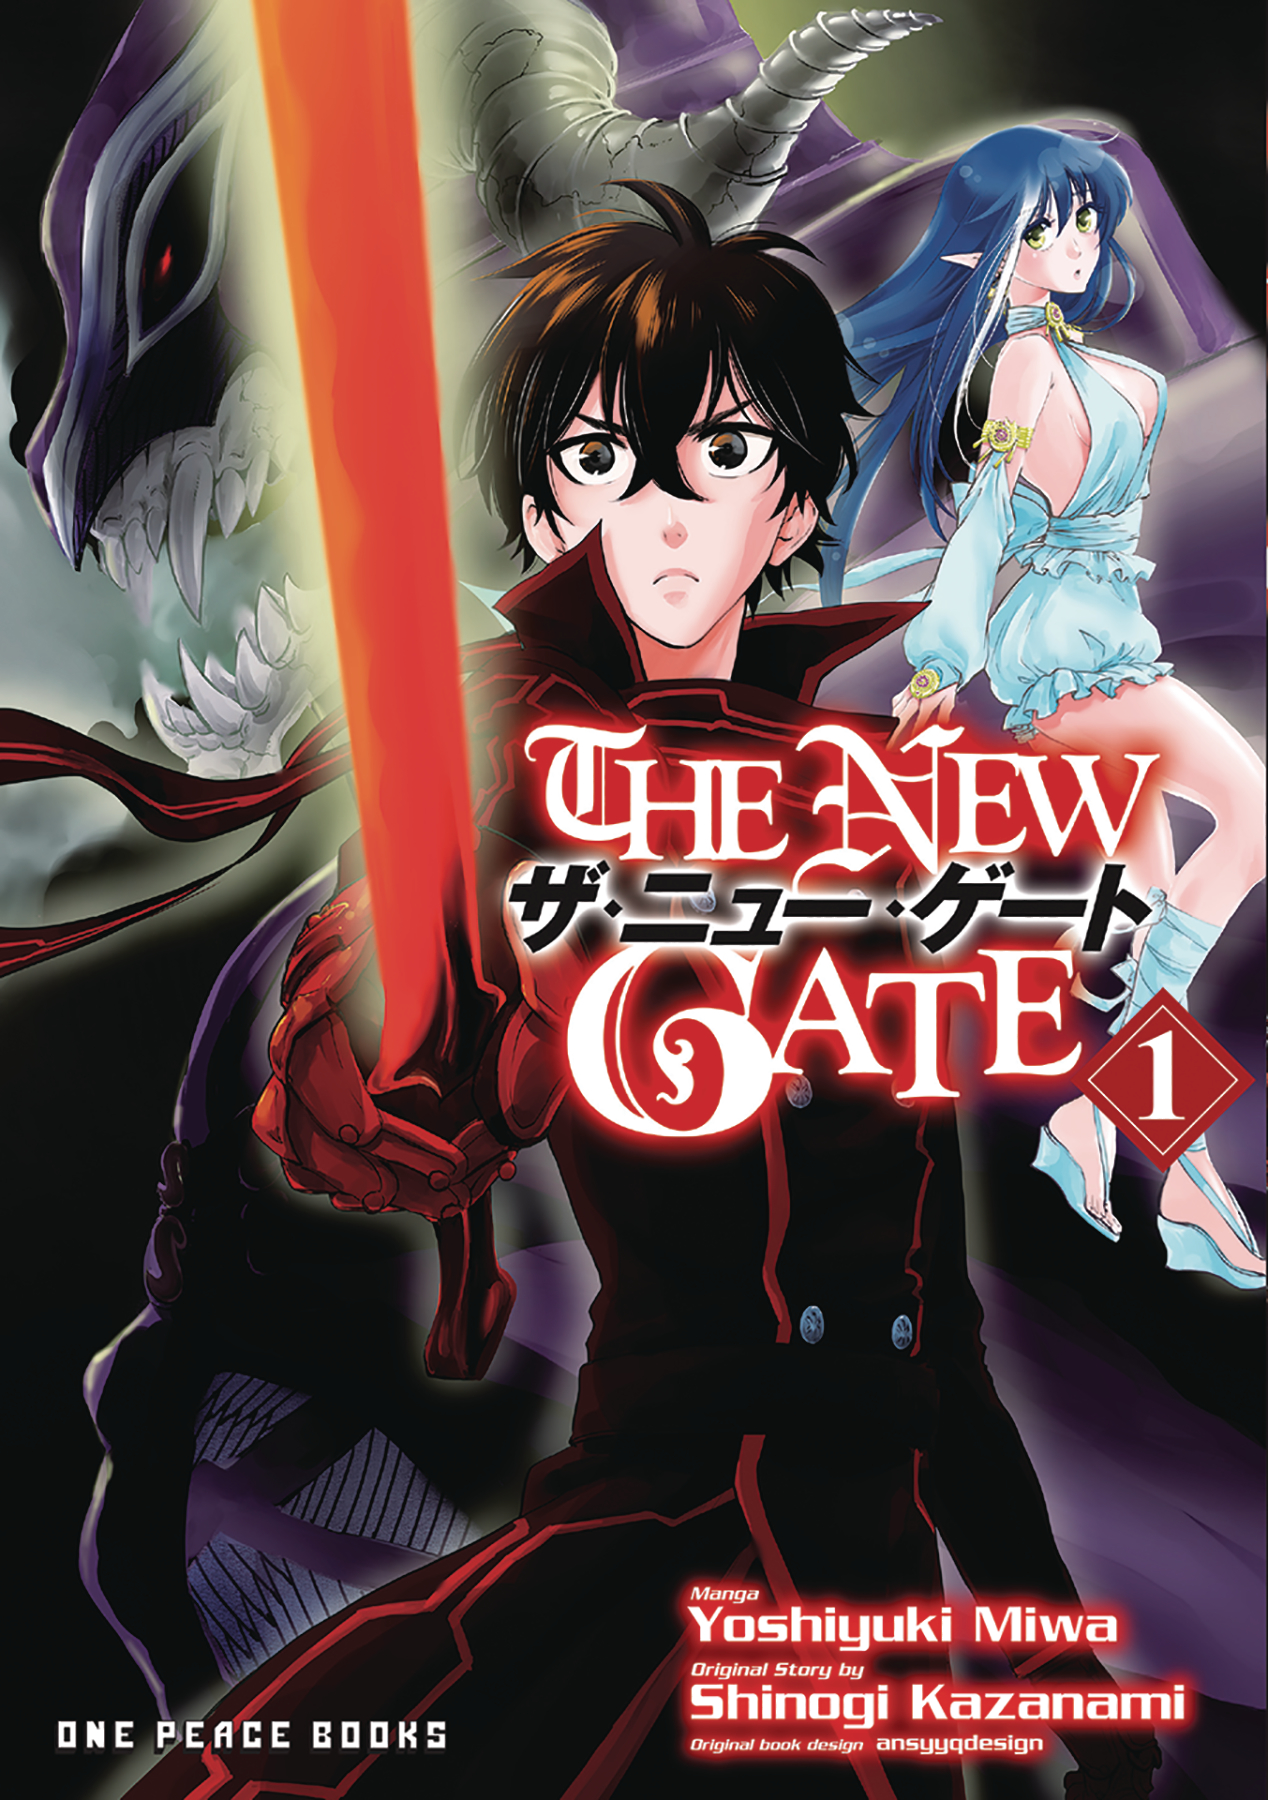 New Gate Manga Volume 1